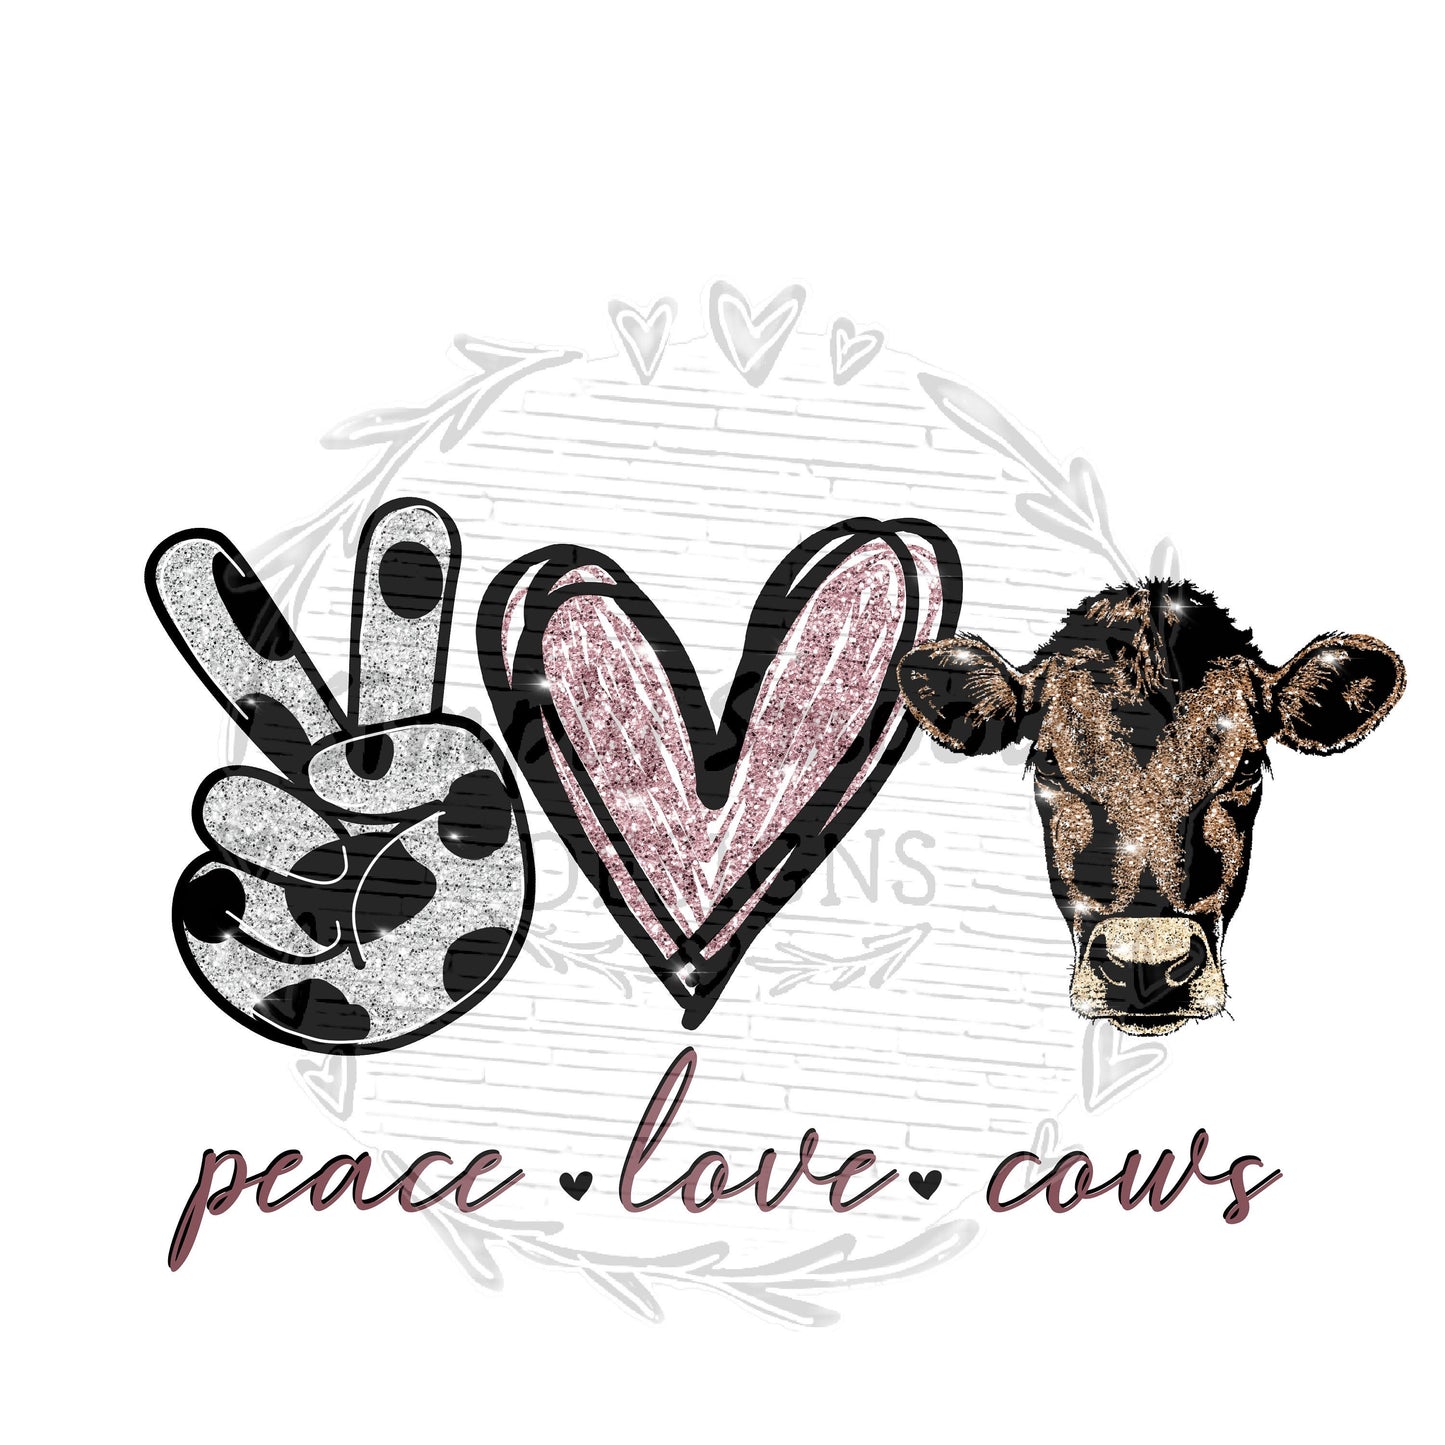 Peace love cows